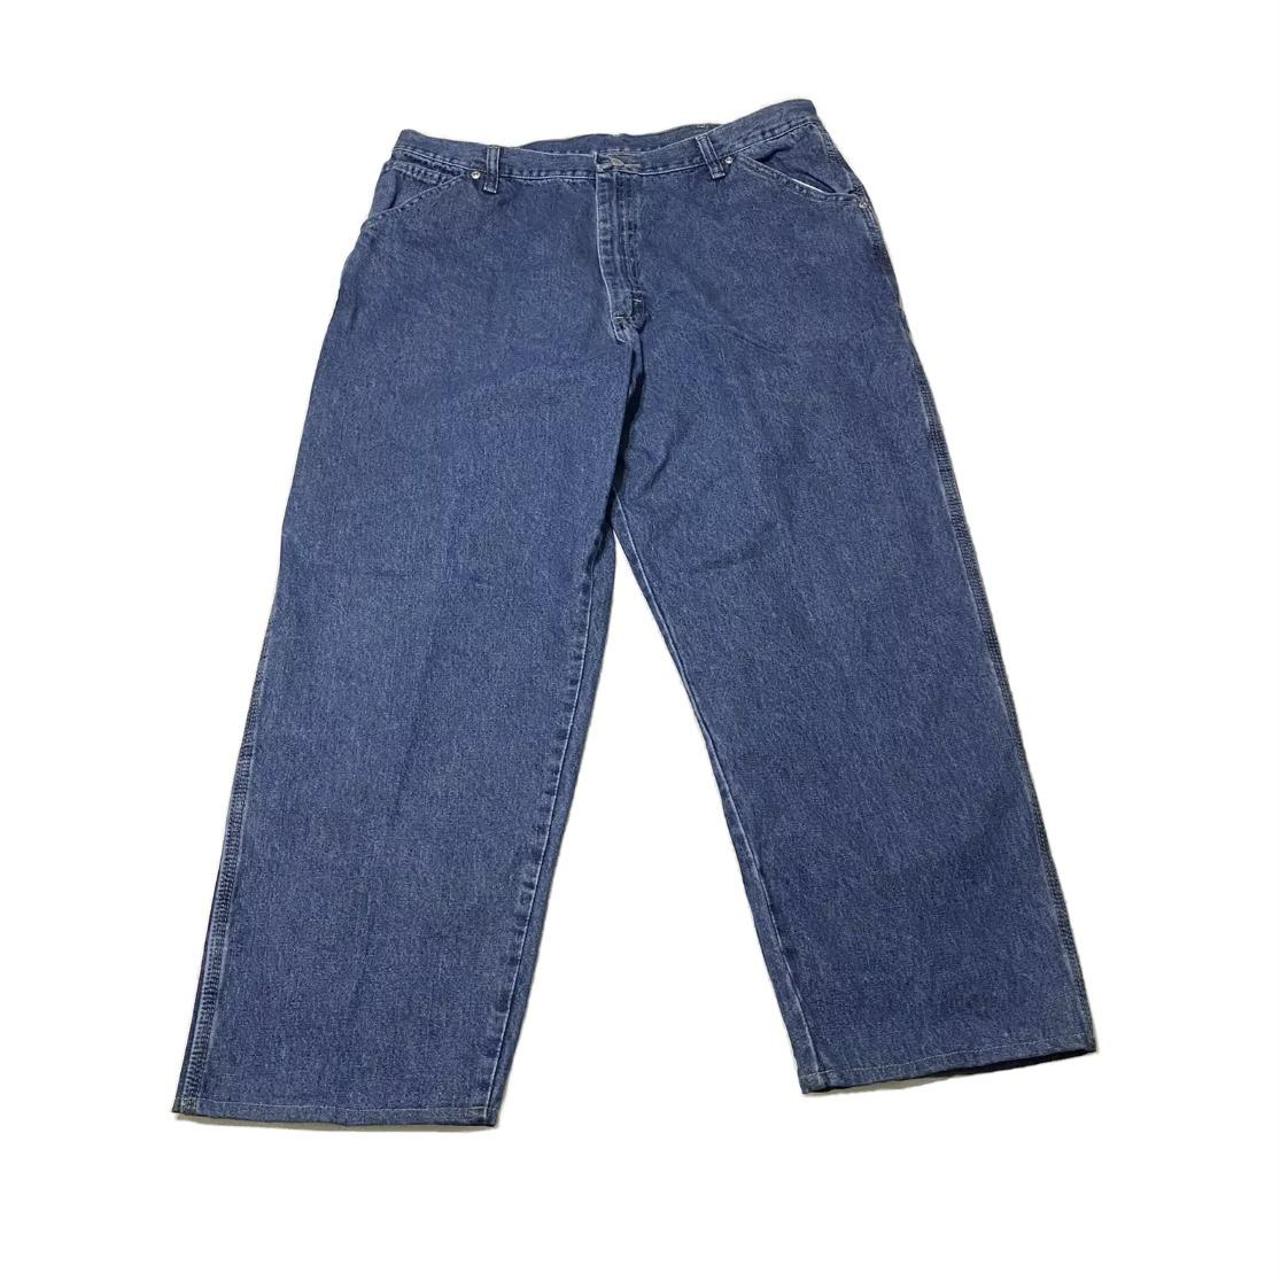 Product Image 2 - Vintage Wrangler Jeans Carpenter Pants